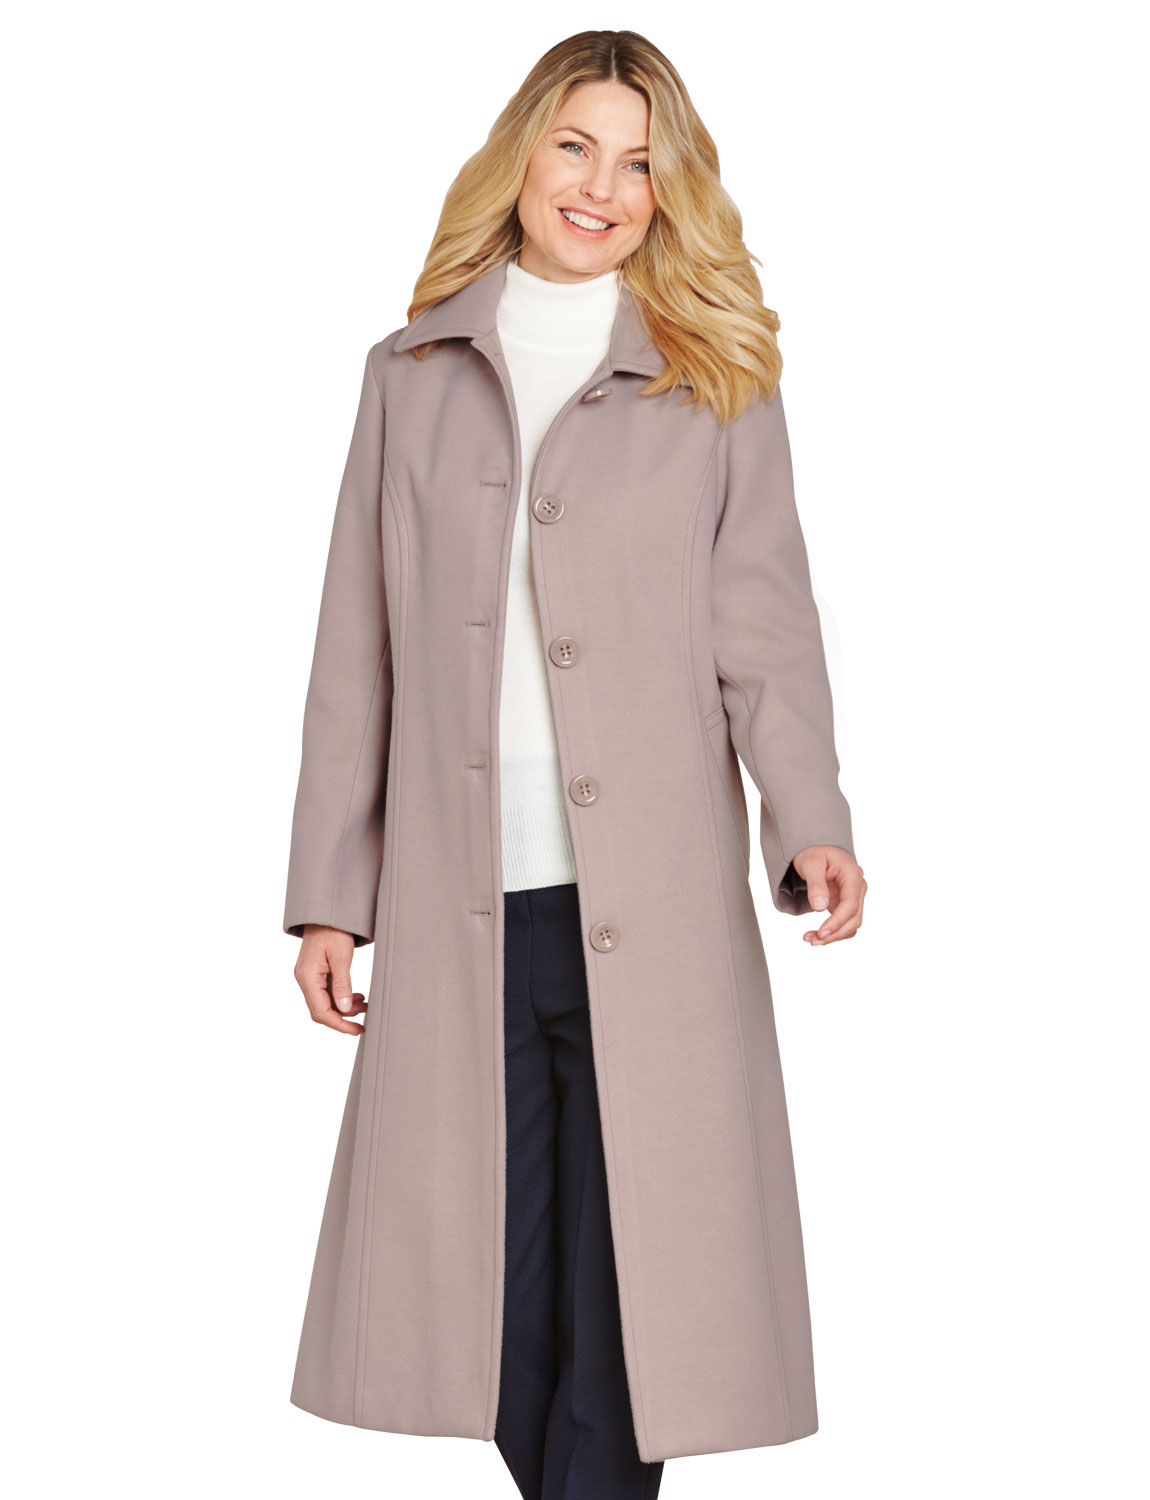 Ladies Faux Wool Coat Length 45 Inch | eBay